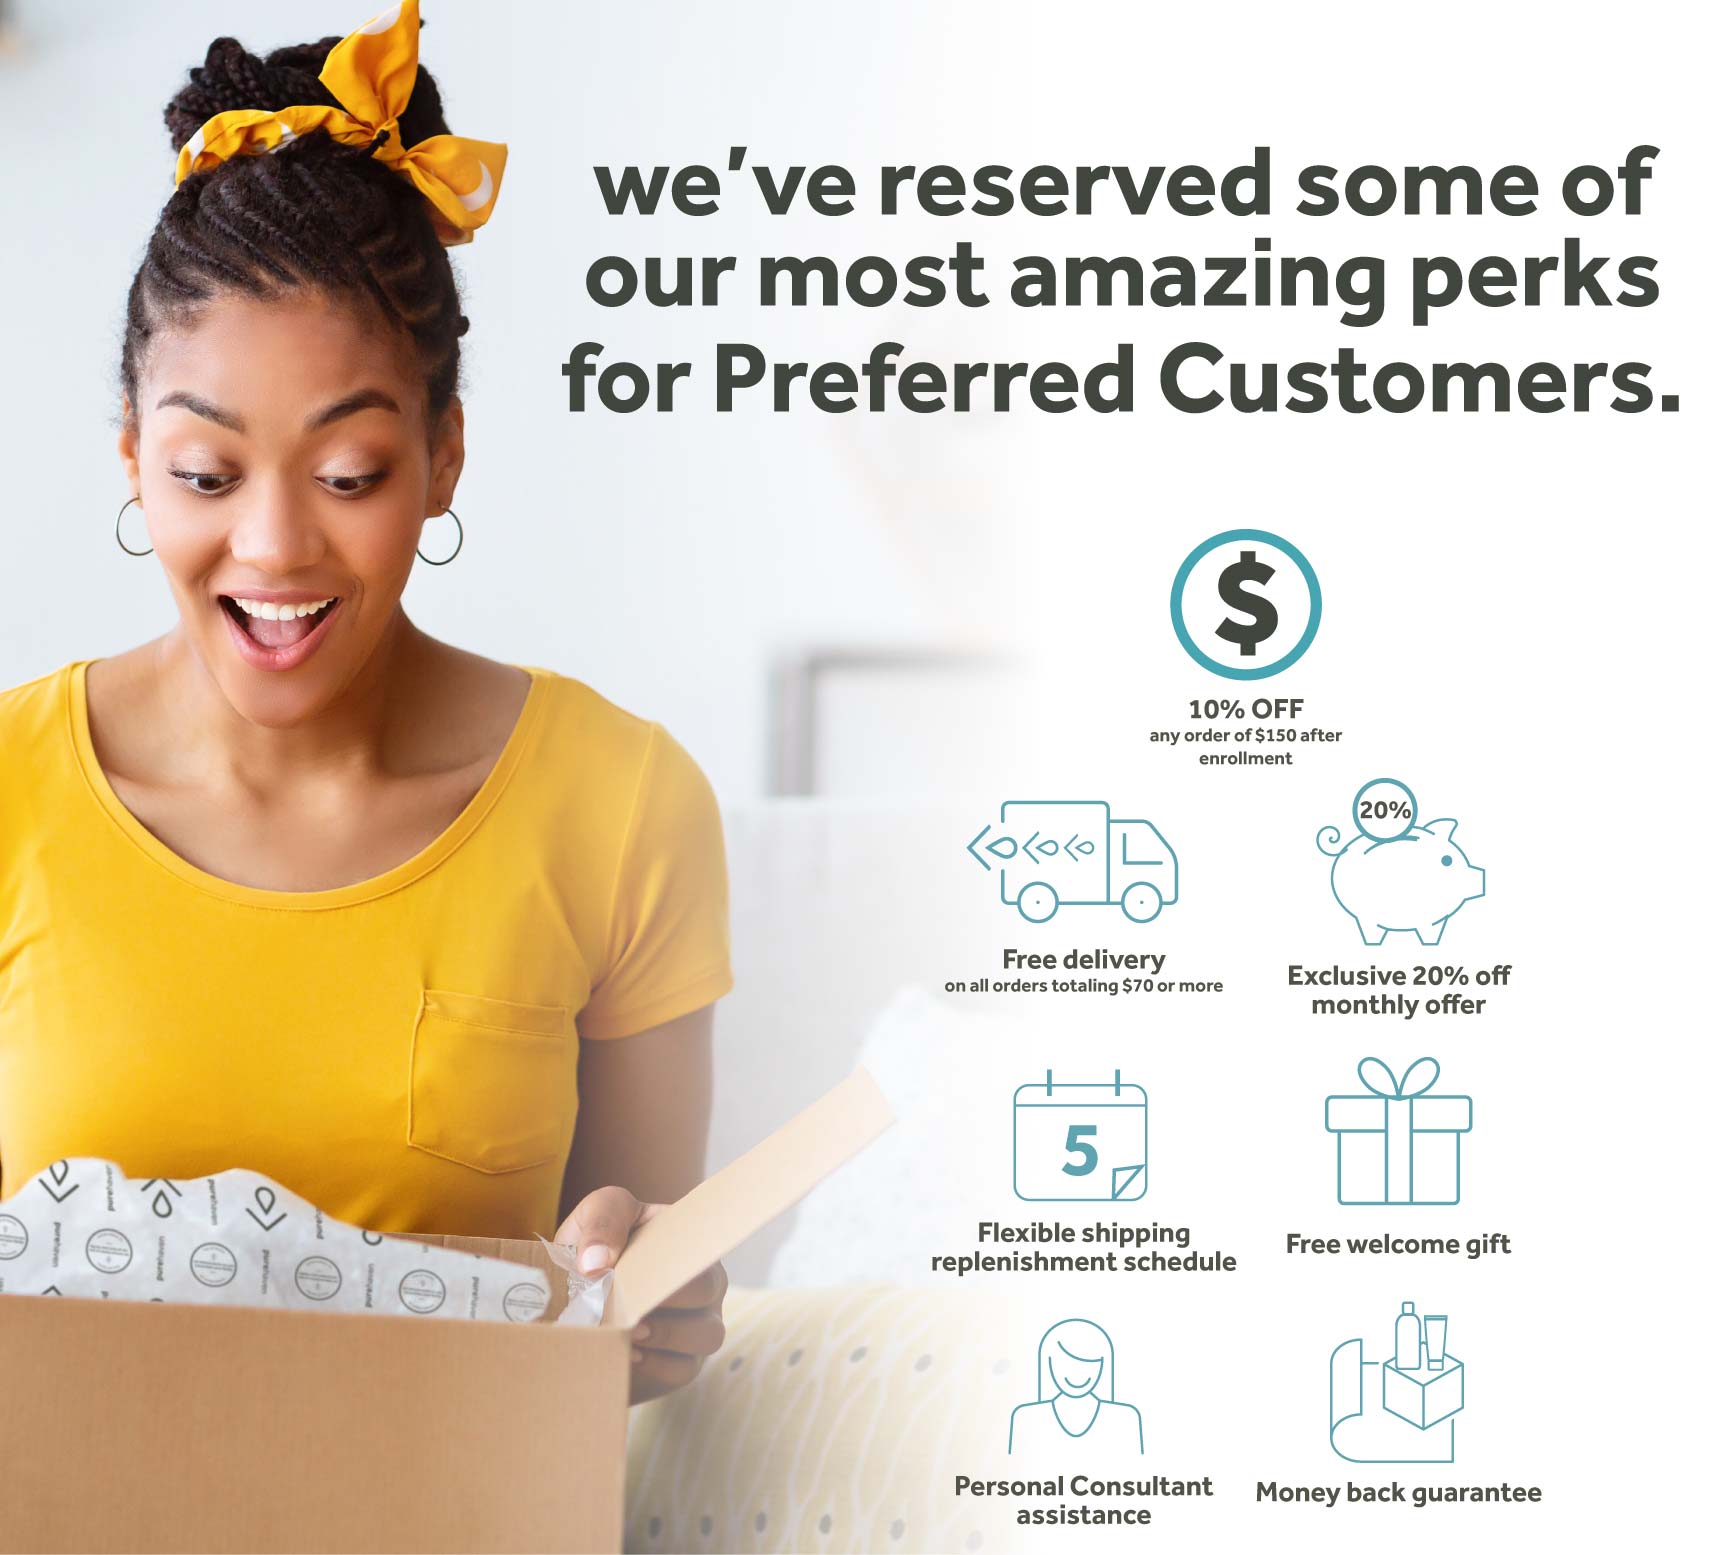 Preferred Customers get amazing perks!